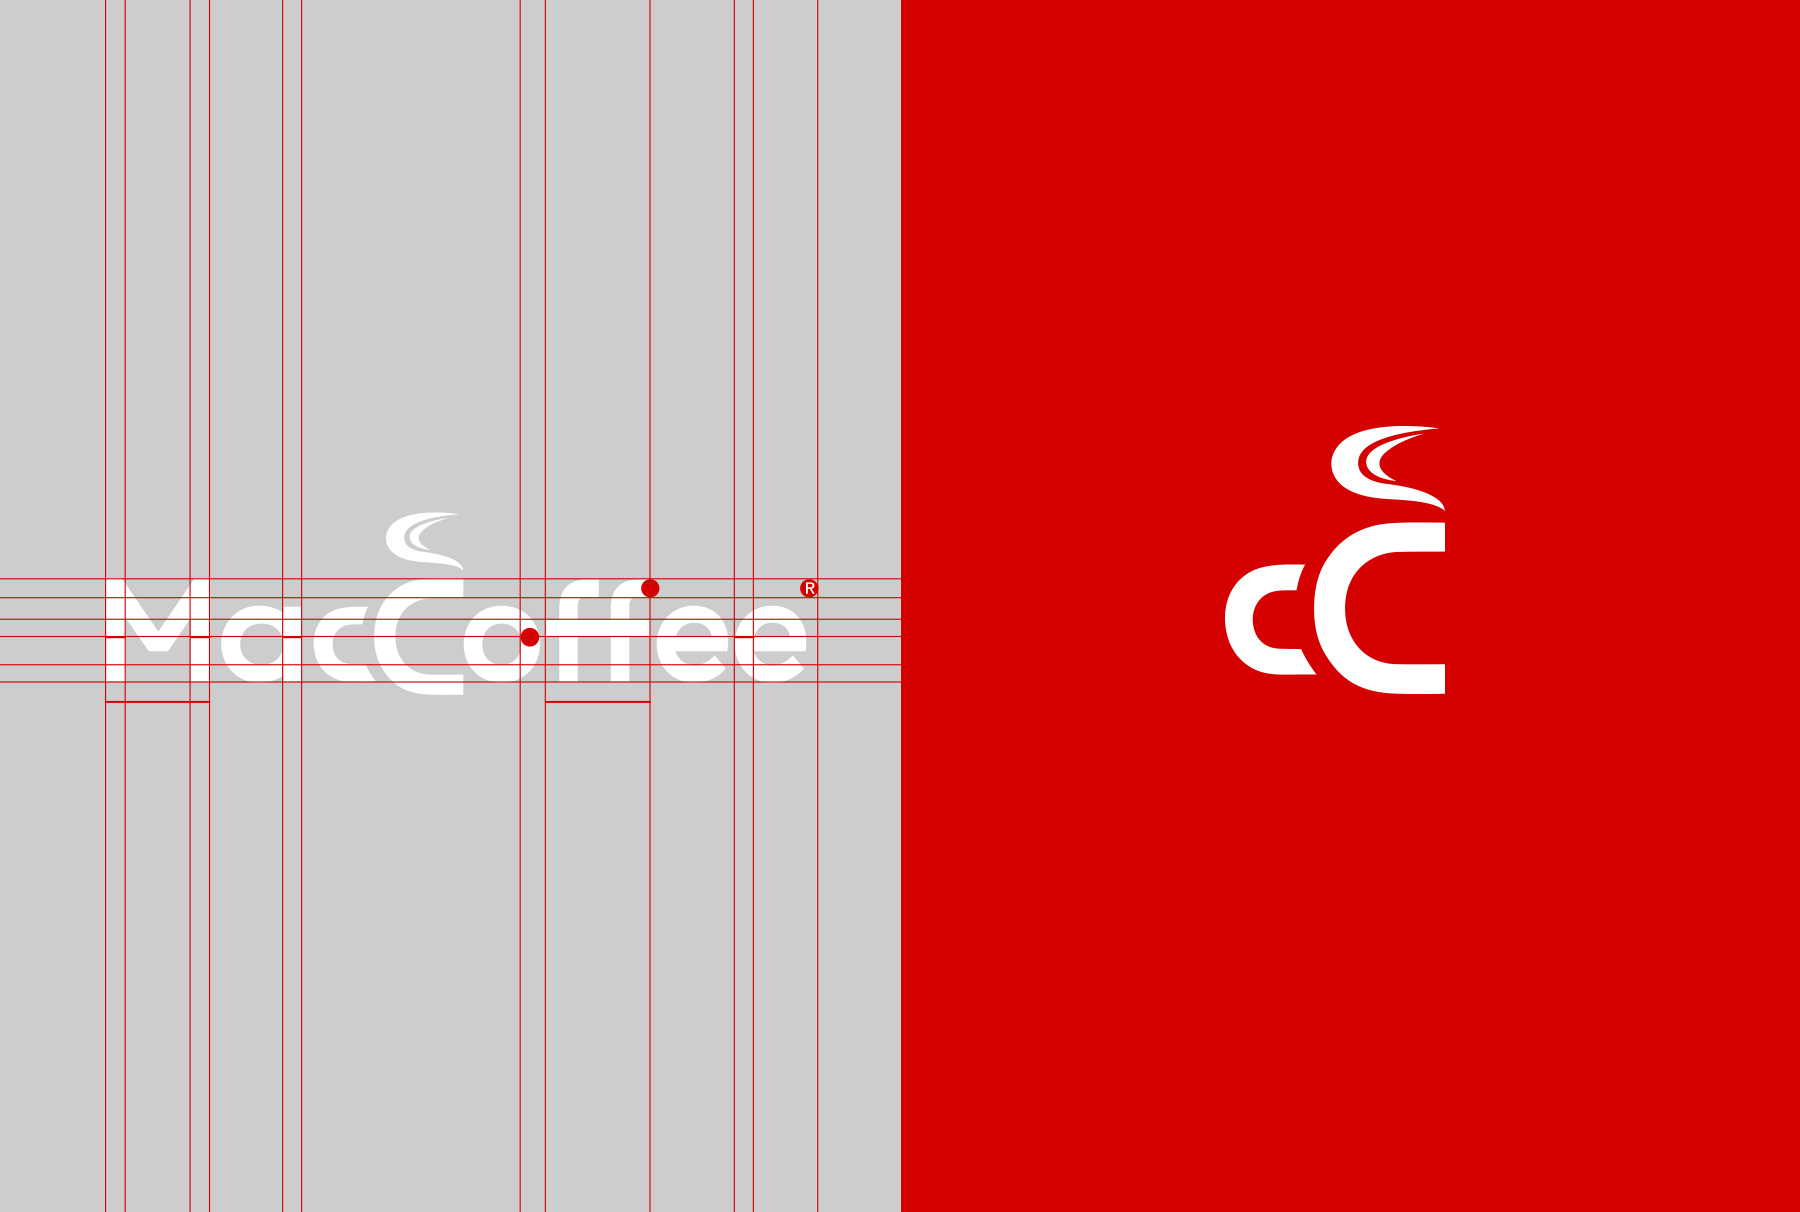 Maccofee logo design